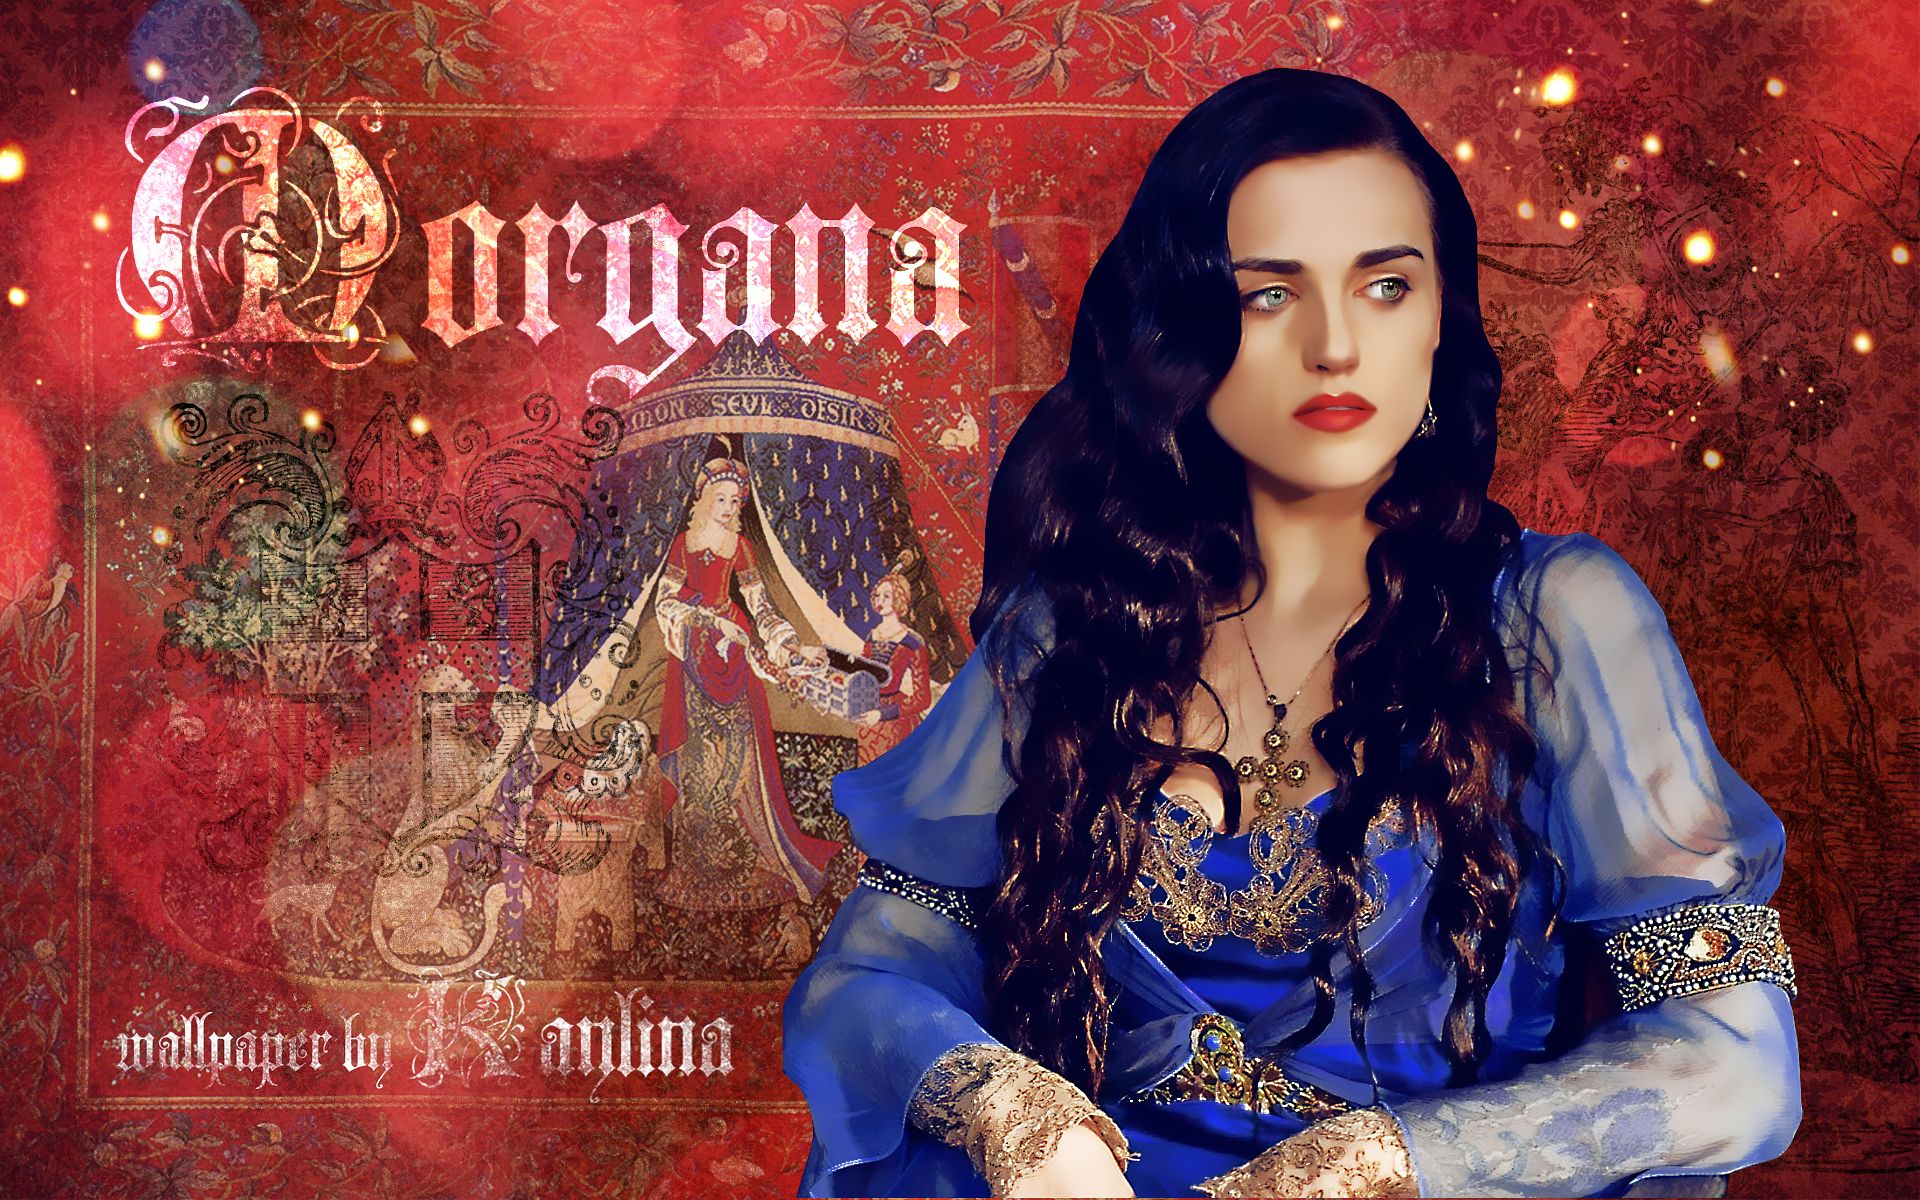 Morgana wallpaper by Kaylina on DeviantArt